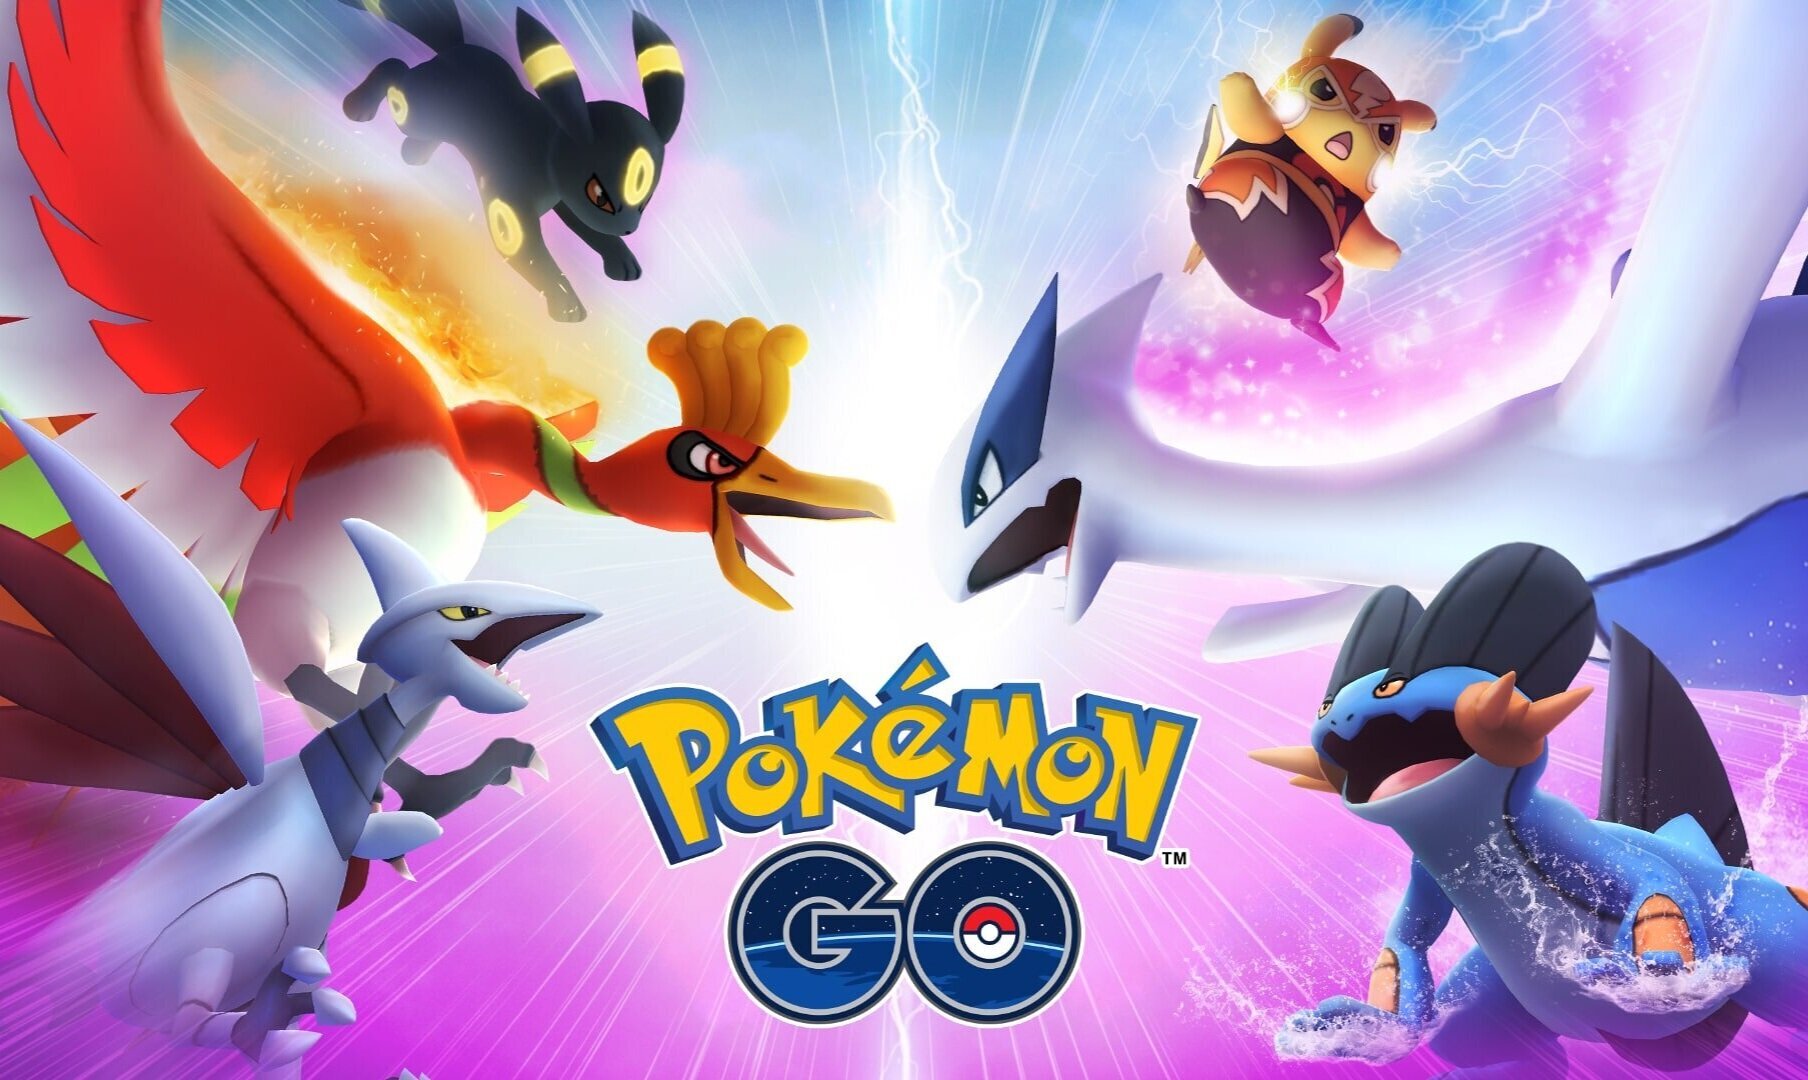 Articuno Pokémon GO Raid Battle Tips